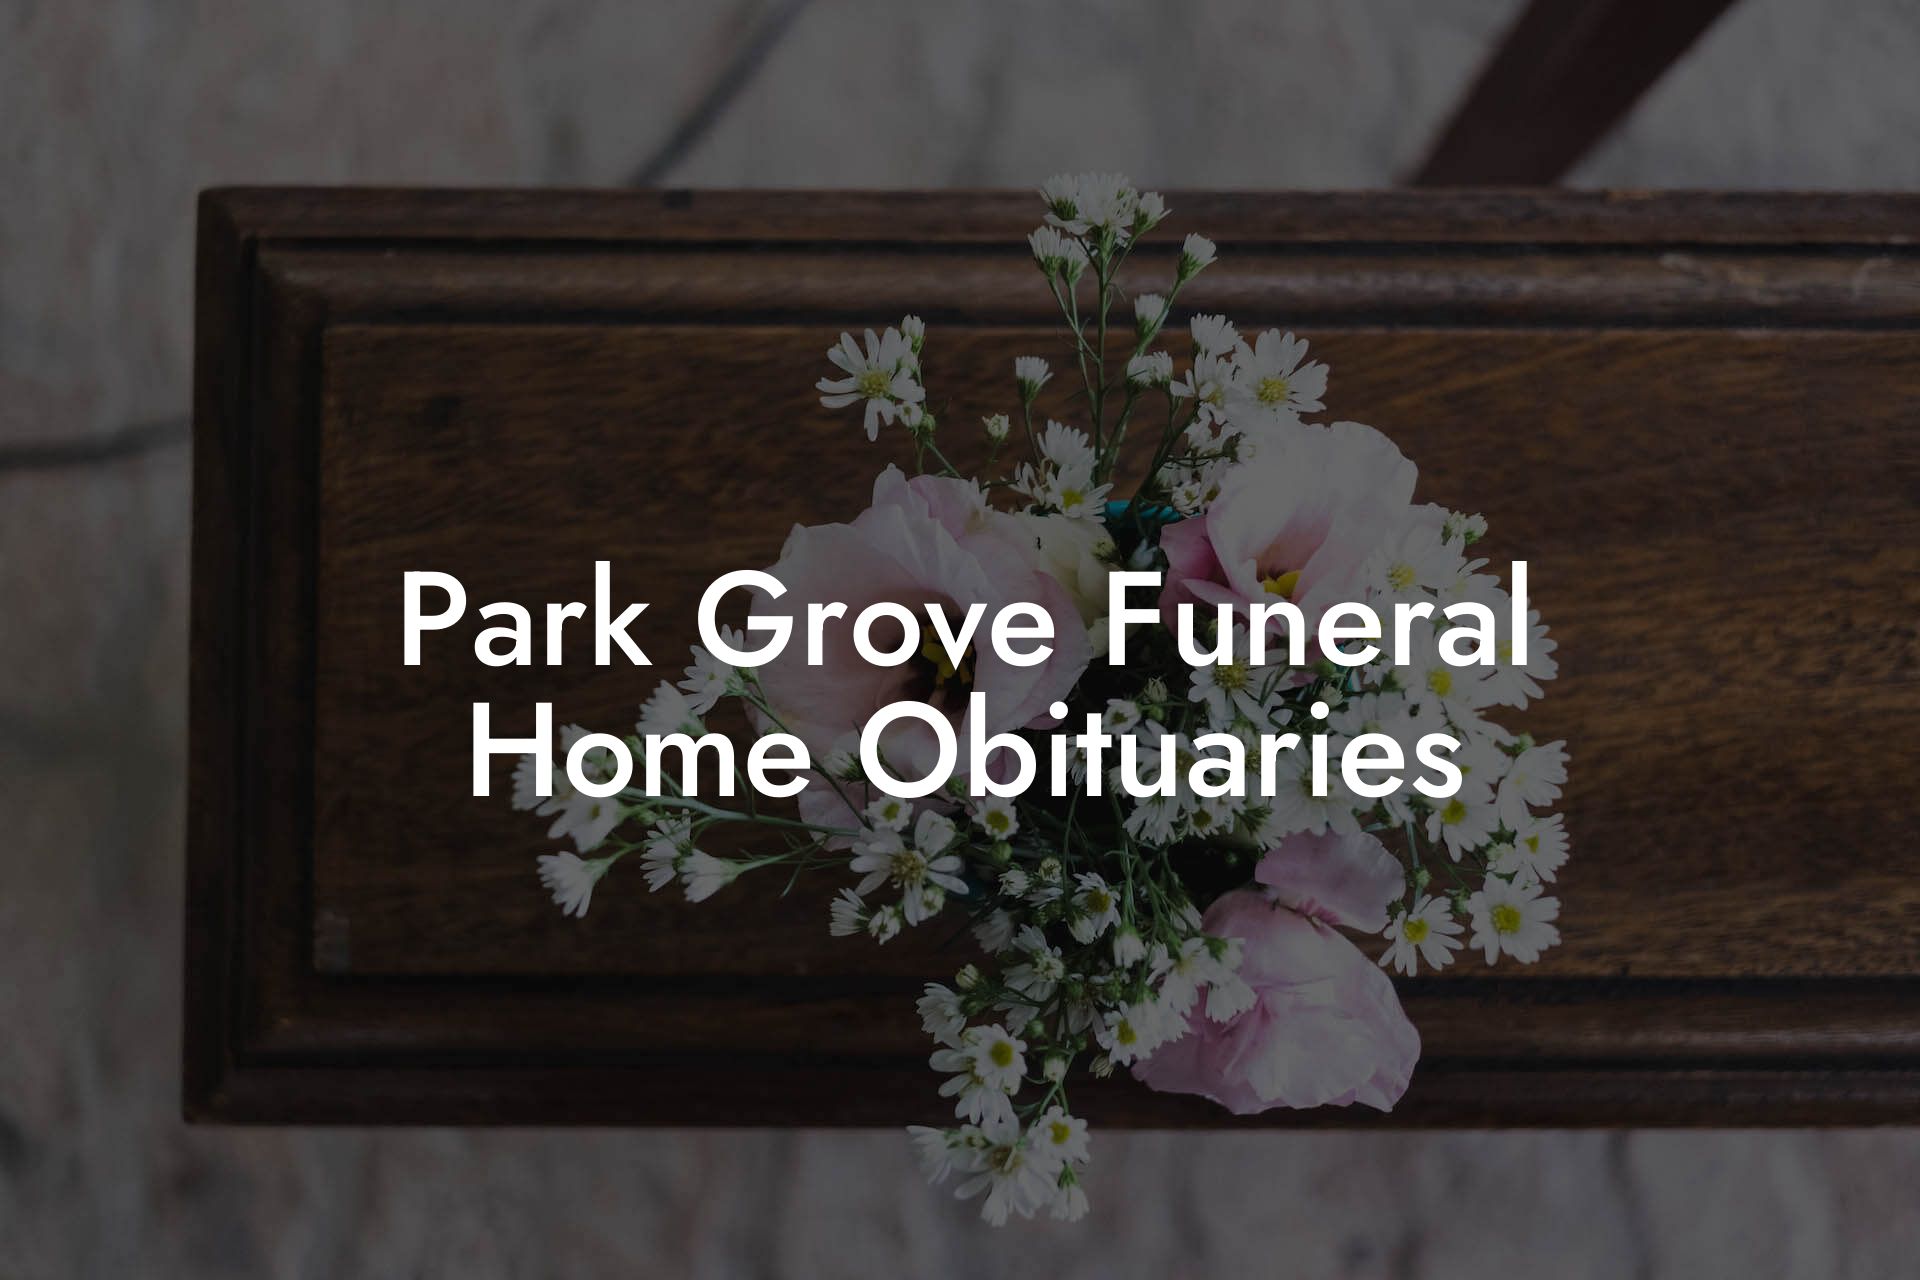 Park Grove Funeral Home Obituaries